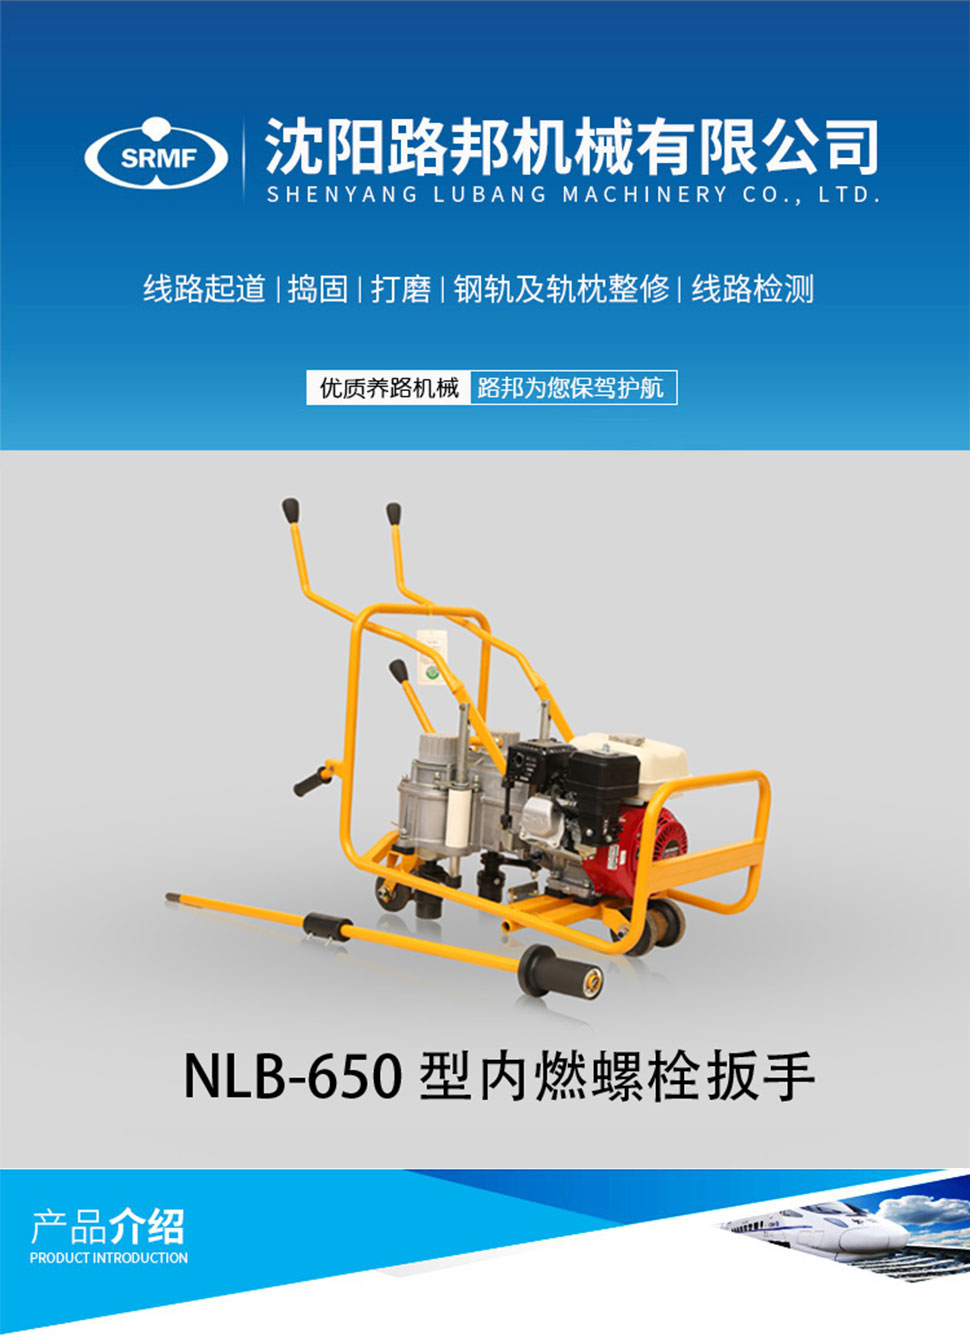 NLB-650型内燃螺栓扳手